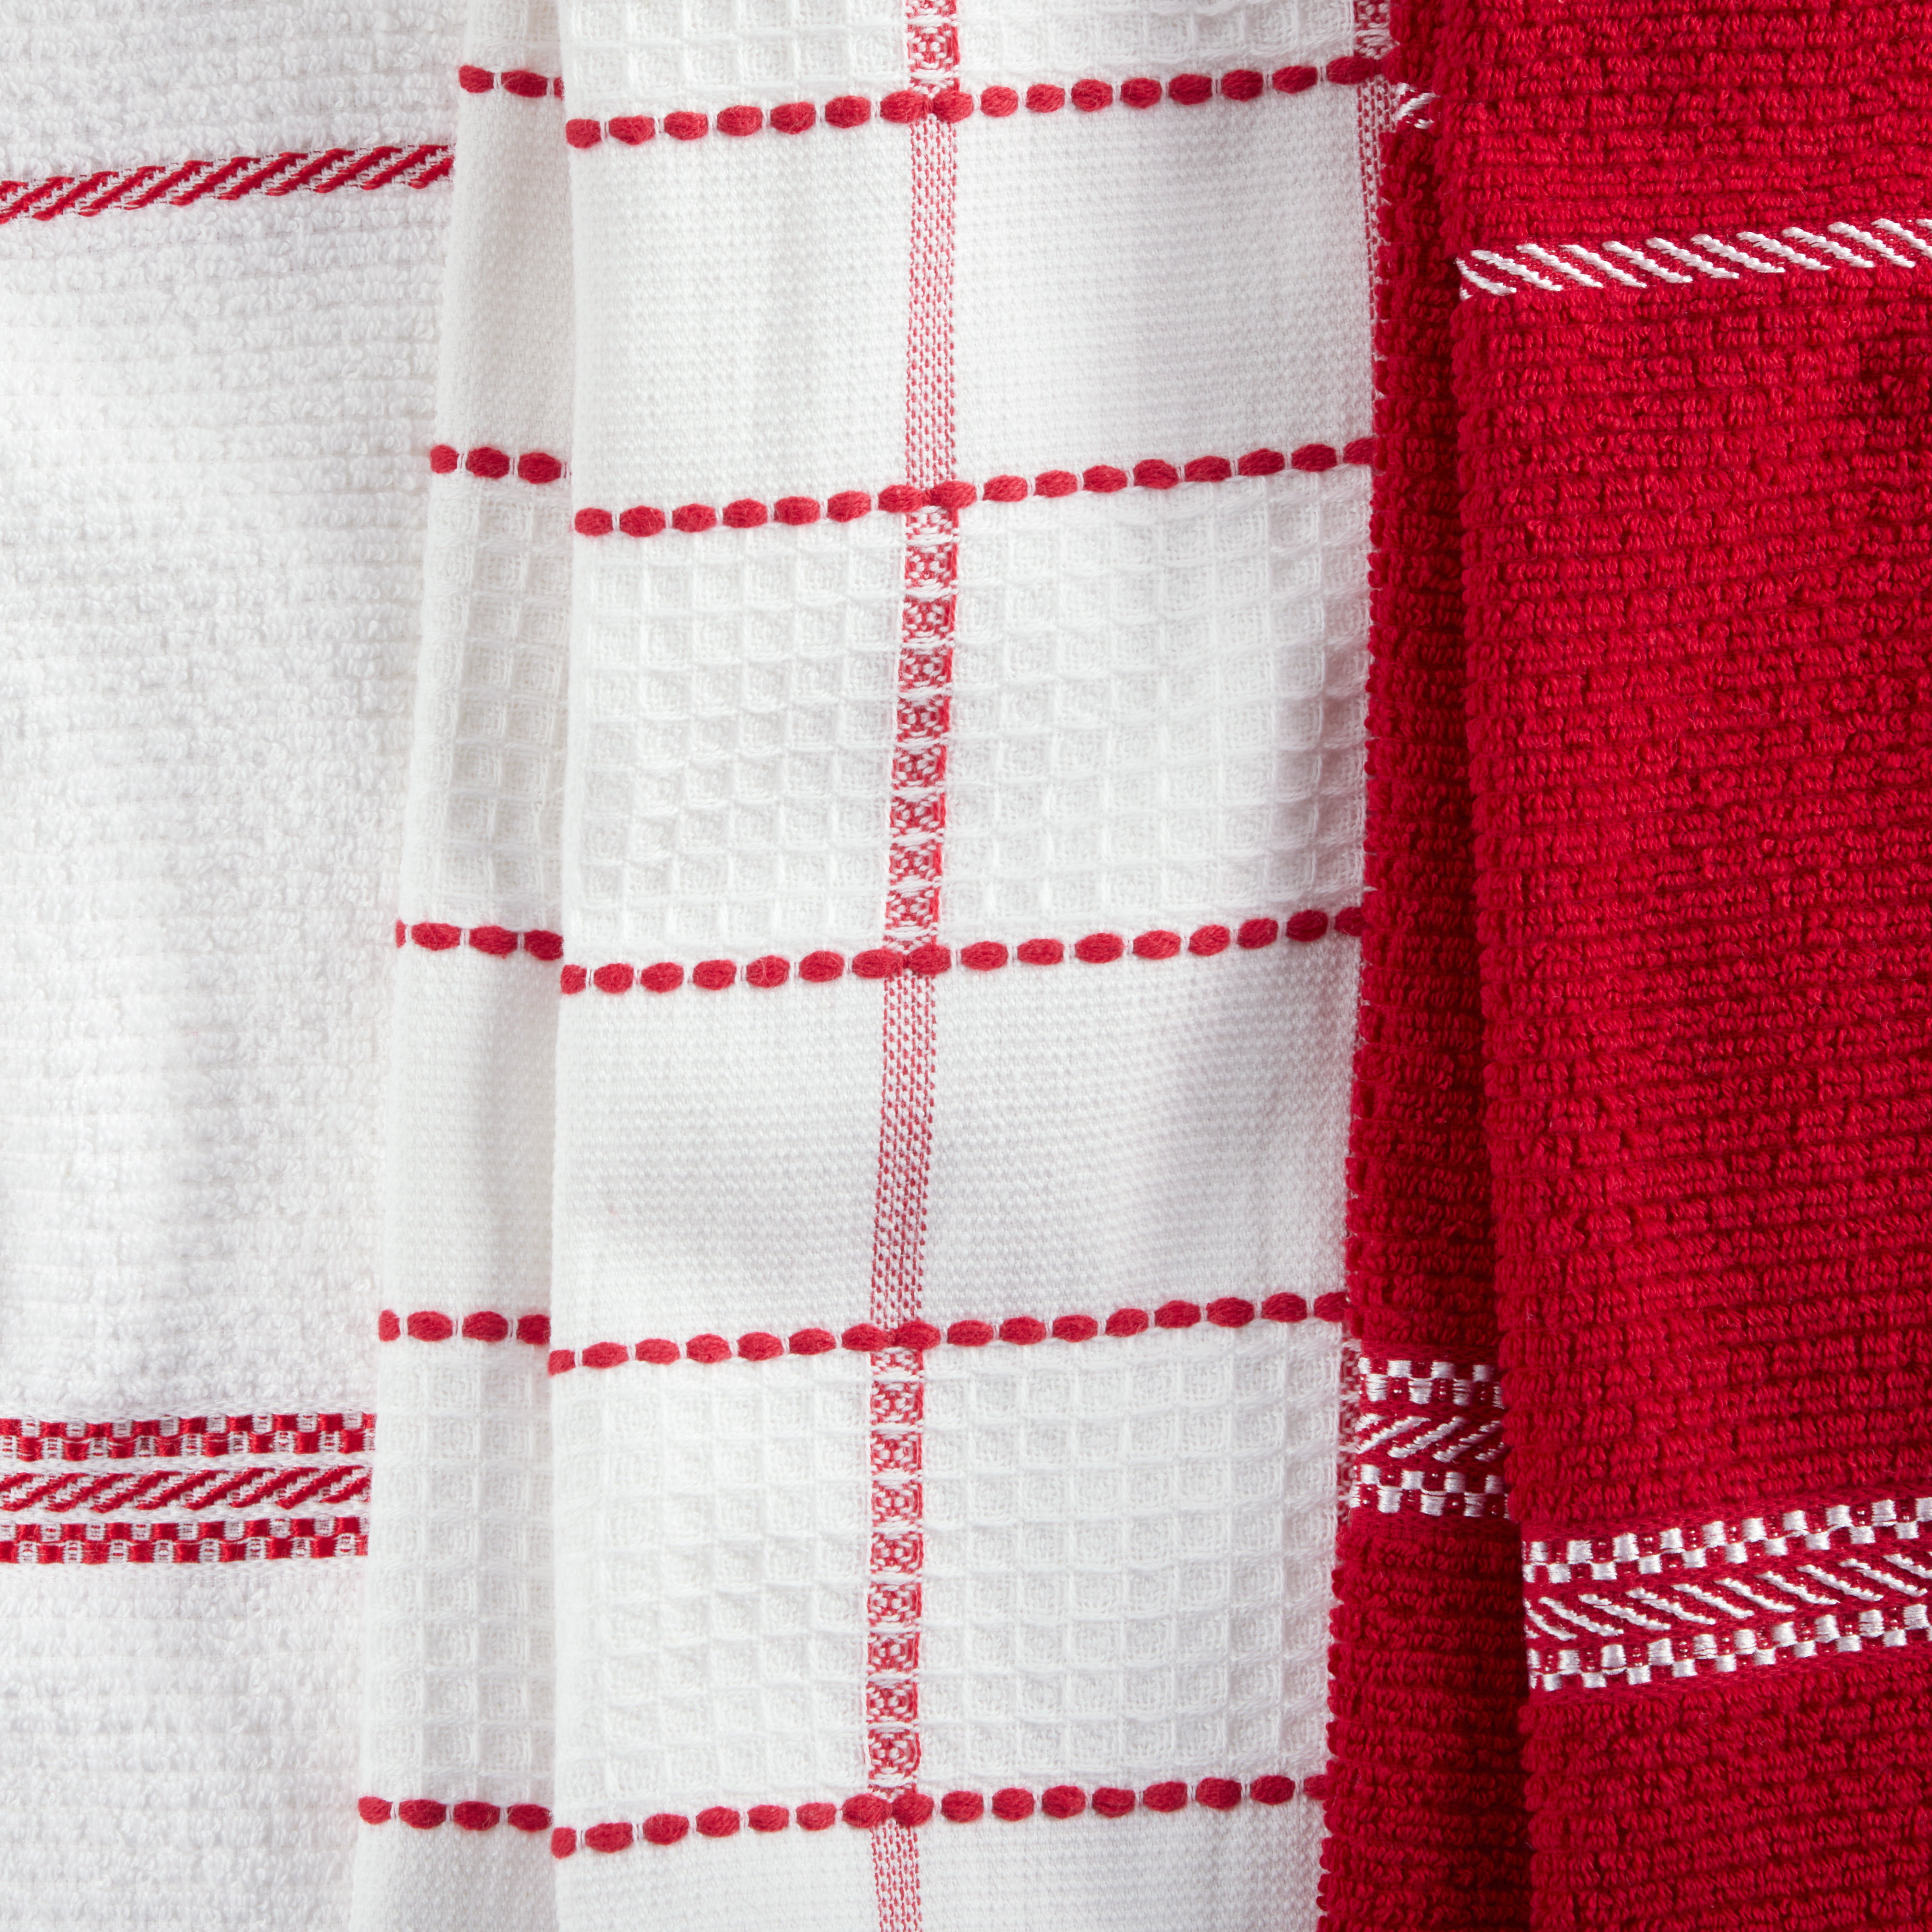 MARTHA STEWART COTTON KITCHEN TOWELS (8 PACK) SELECT DESIGNS NEW